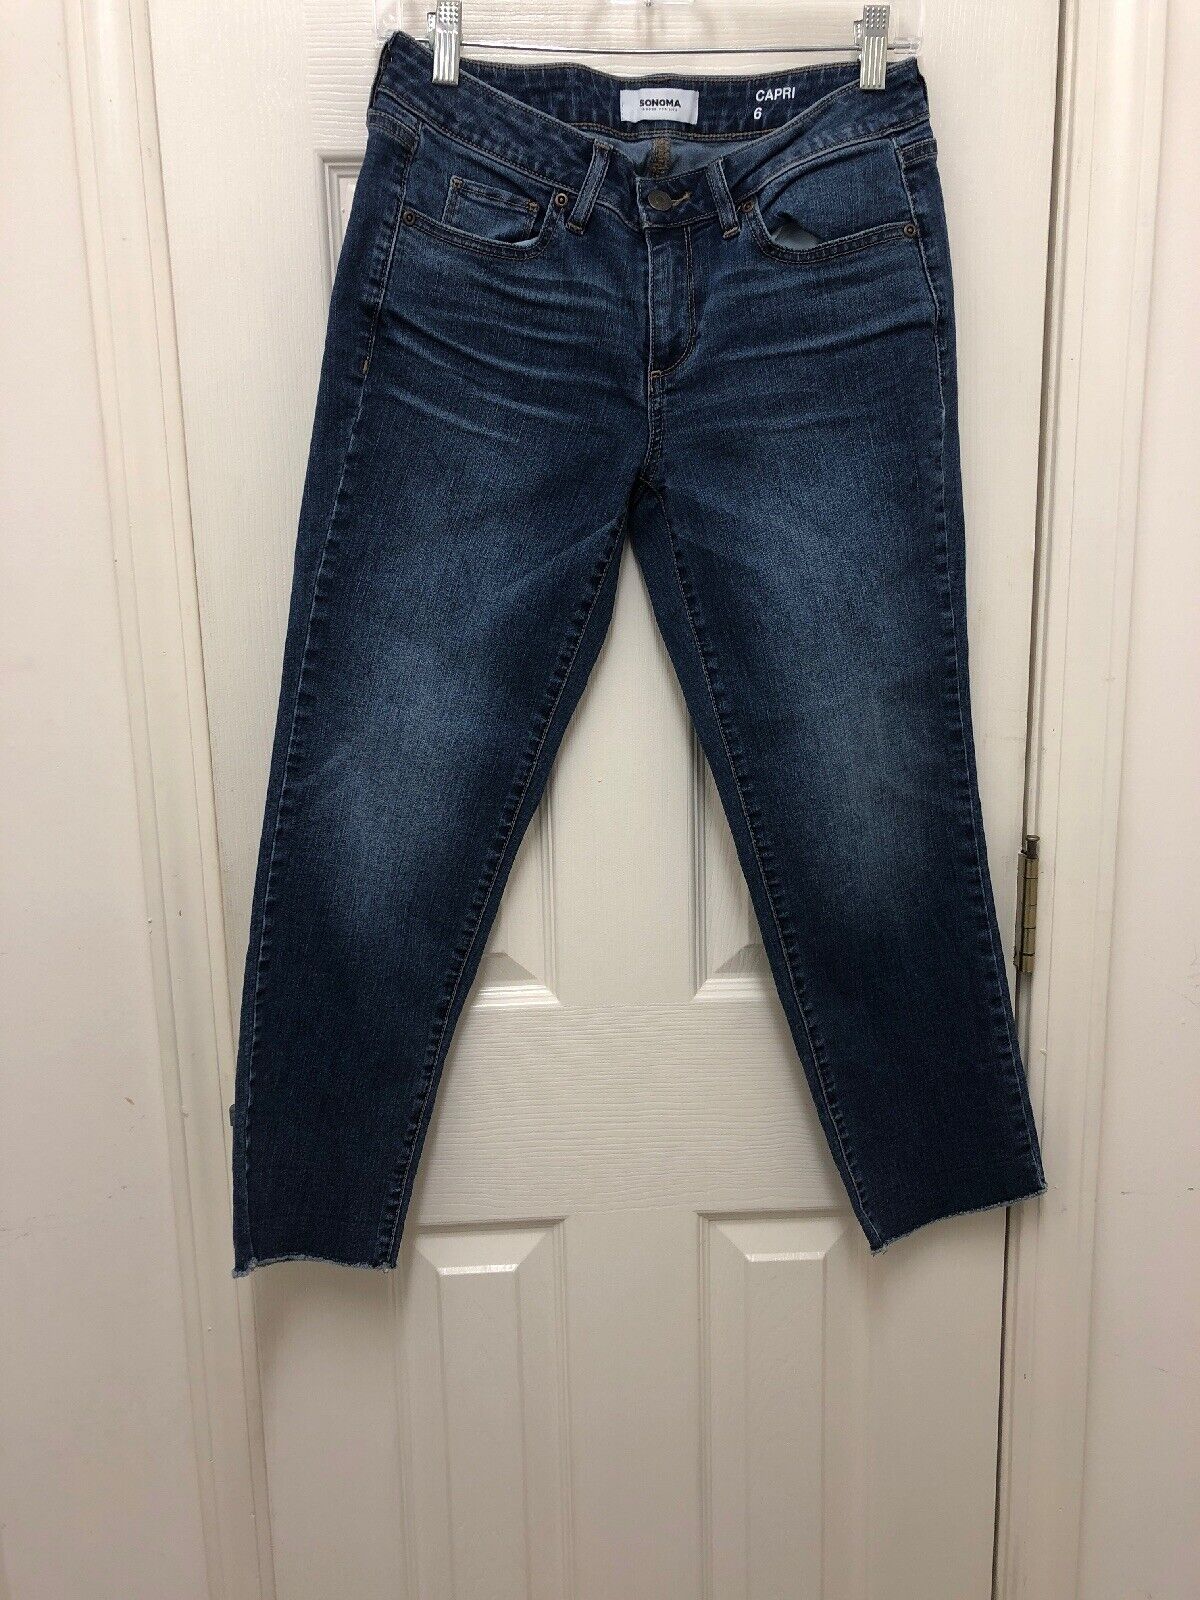 Womens Sonoma Capri Jeans/Size 6/Medium Wash - image 6